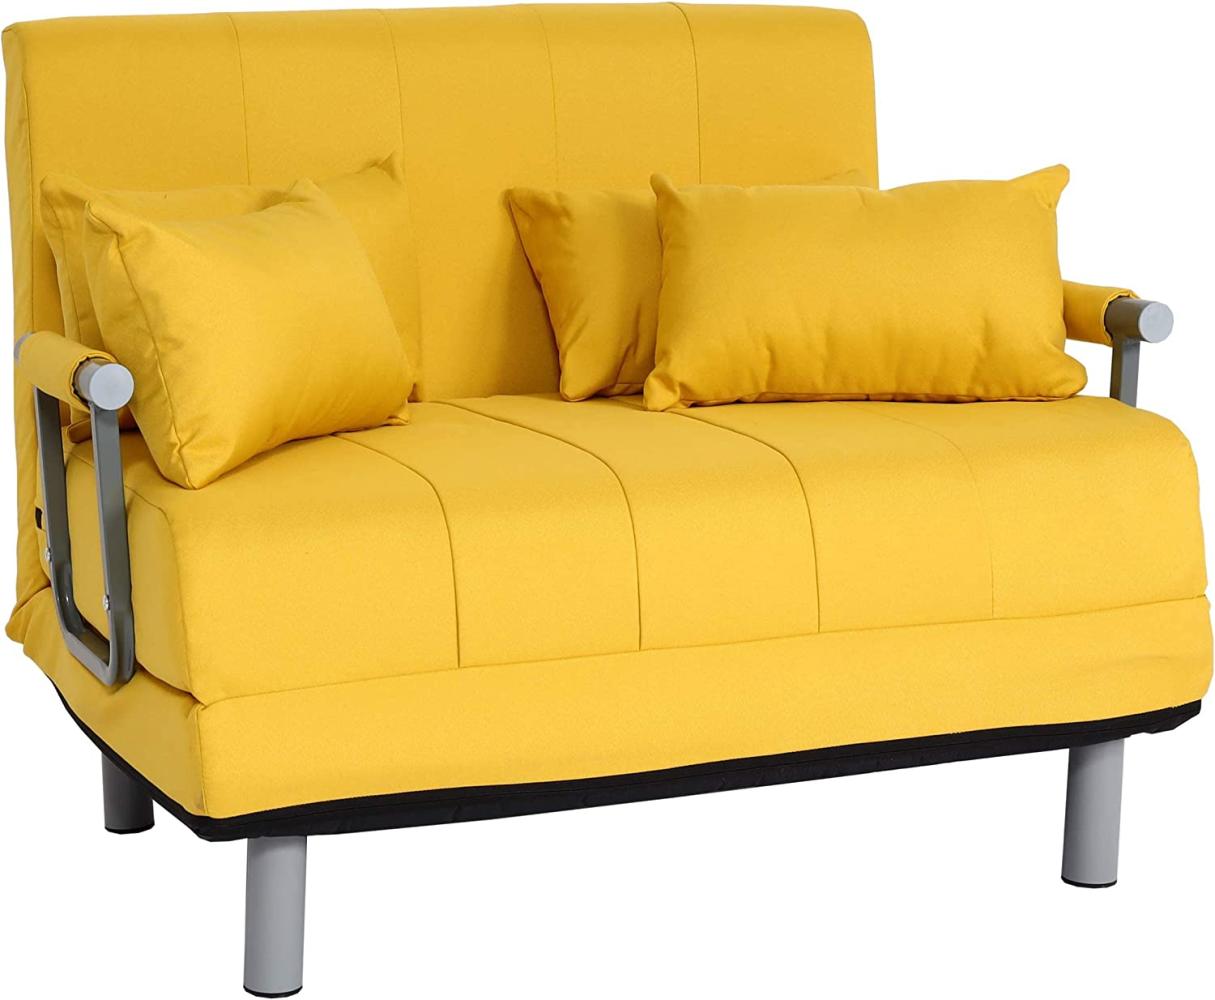 Schlafsessel HWC-K29, Klappsessel Schlafsofa Gästebett Relaxsessel, Liegefläche 186x97cm ~ Stoff/Textil gelb Bild 1